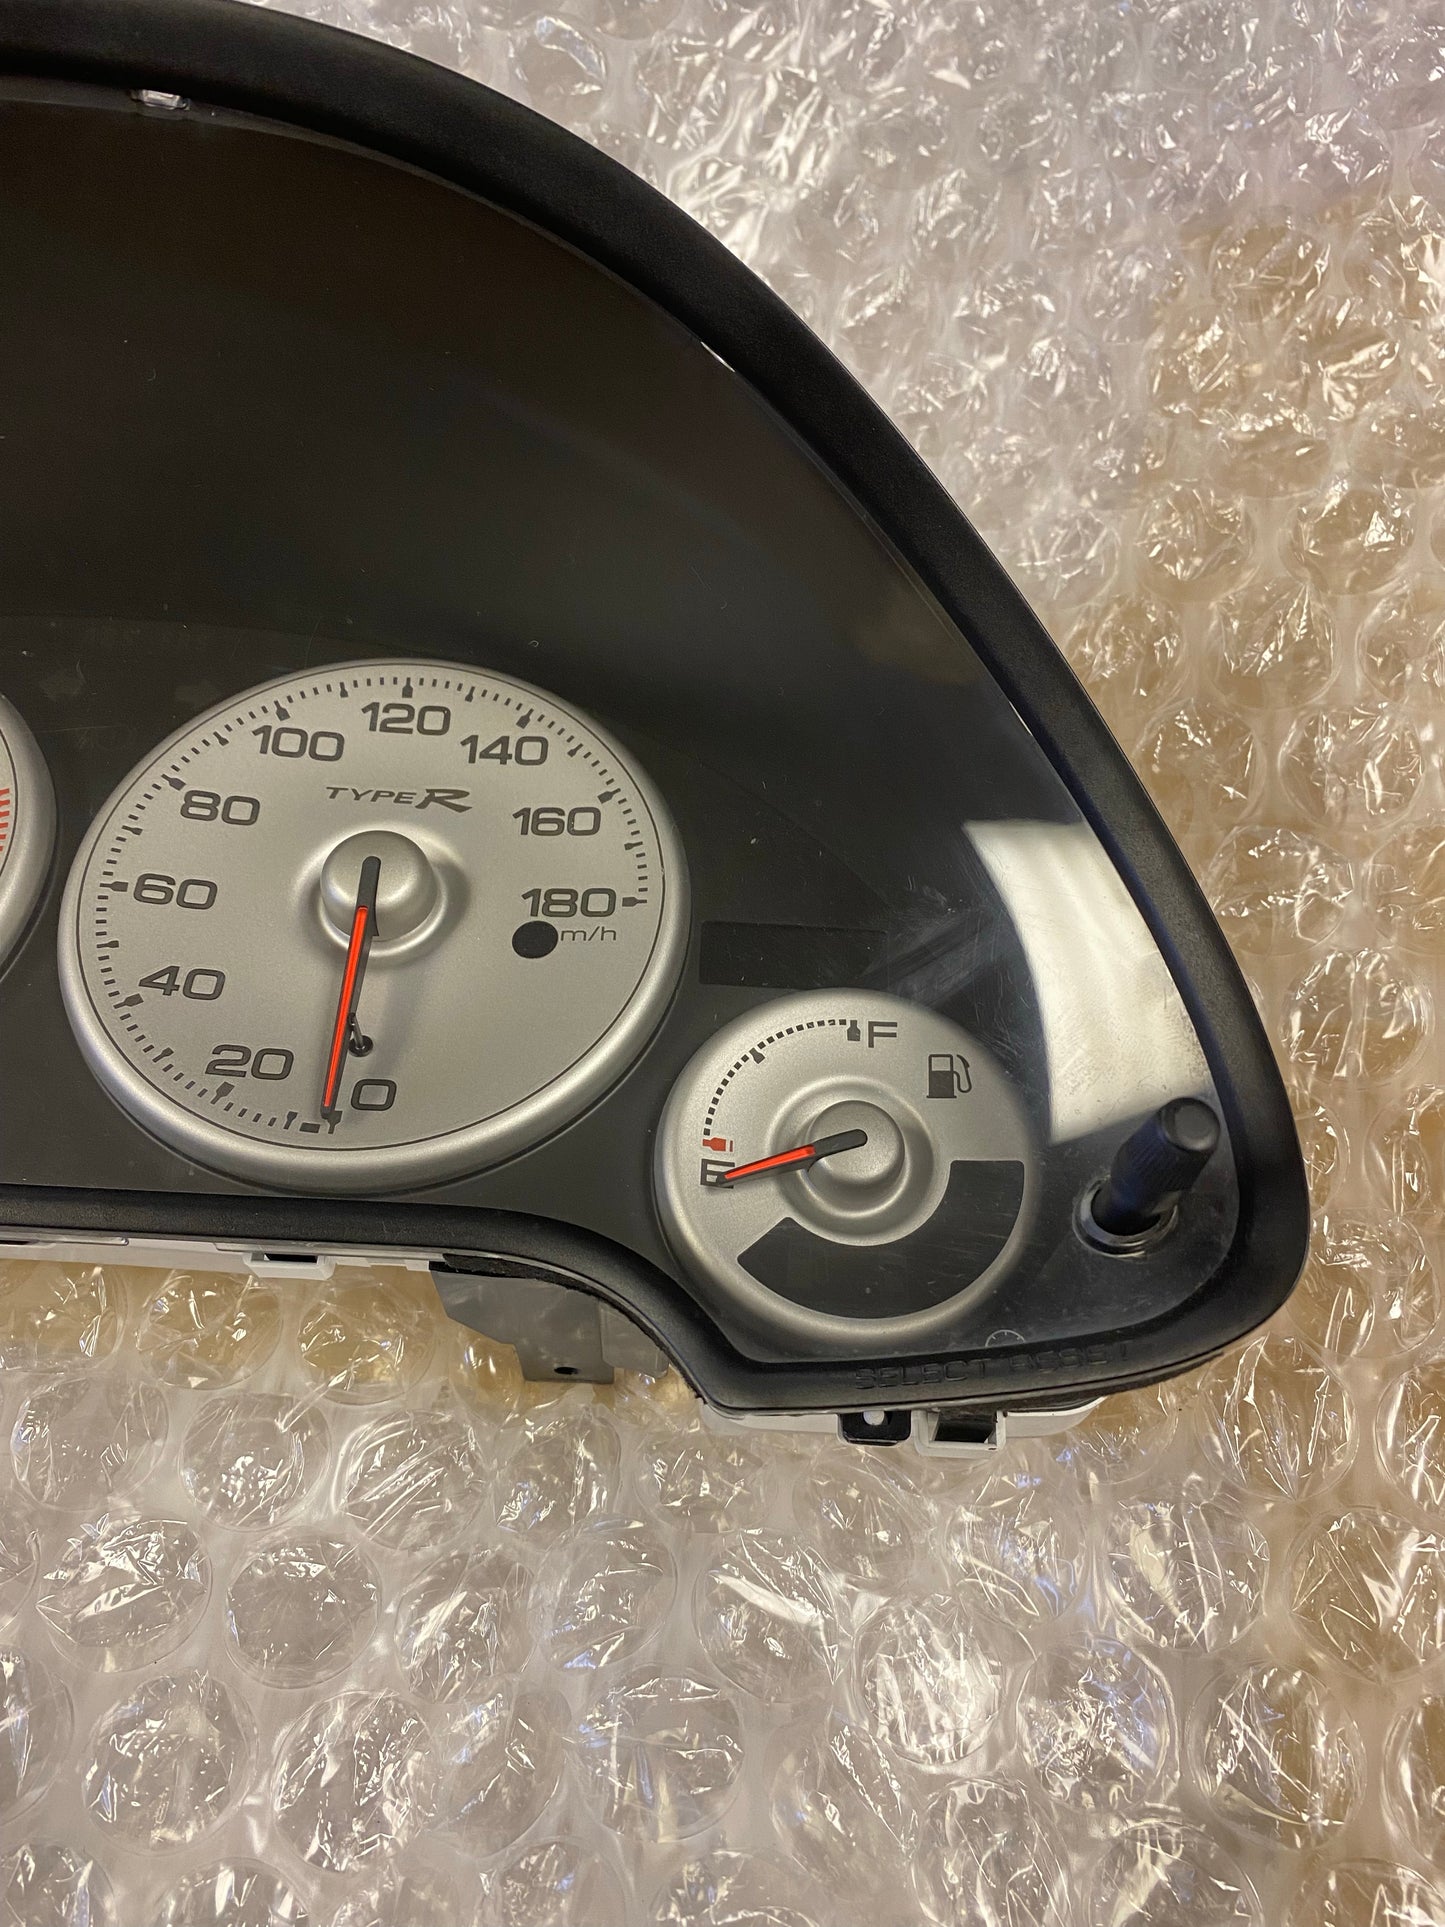 Honda Integra Type R DC5 Speedometer Speedo Clocks Cluster Rev Counter 103Km